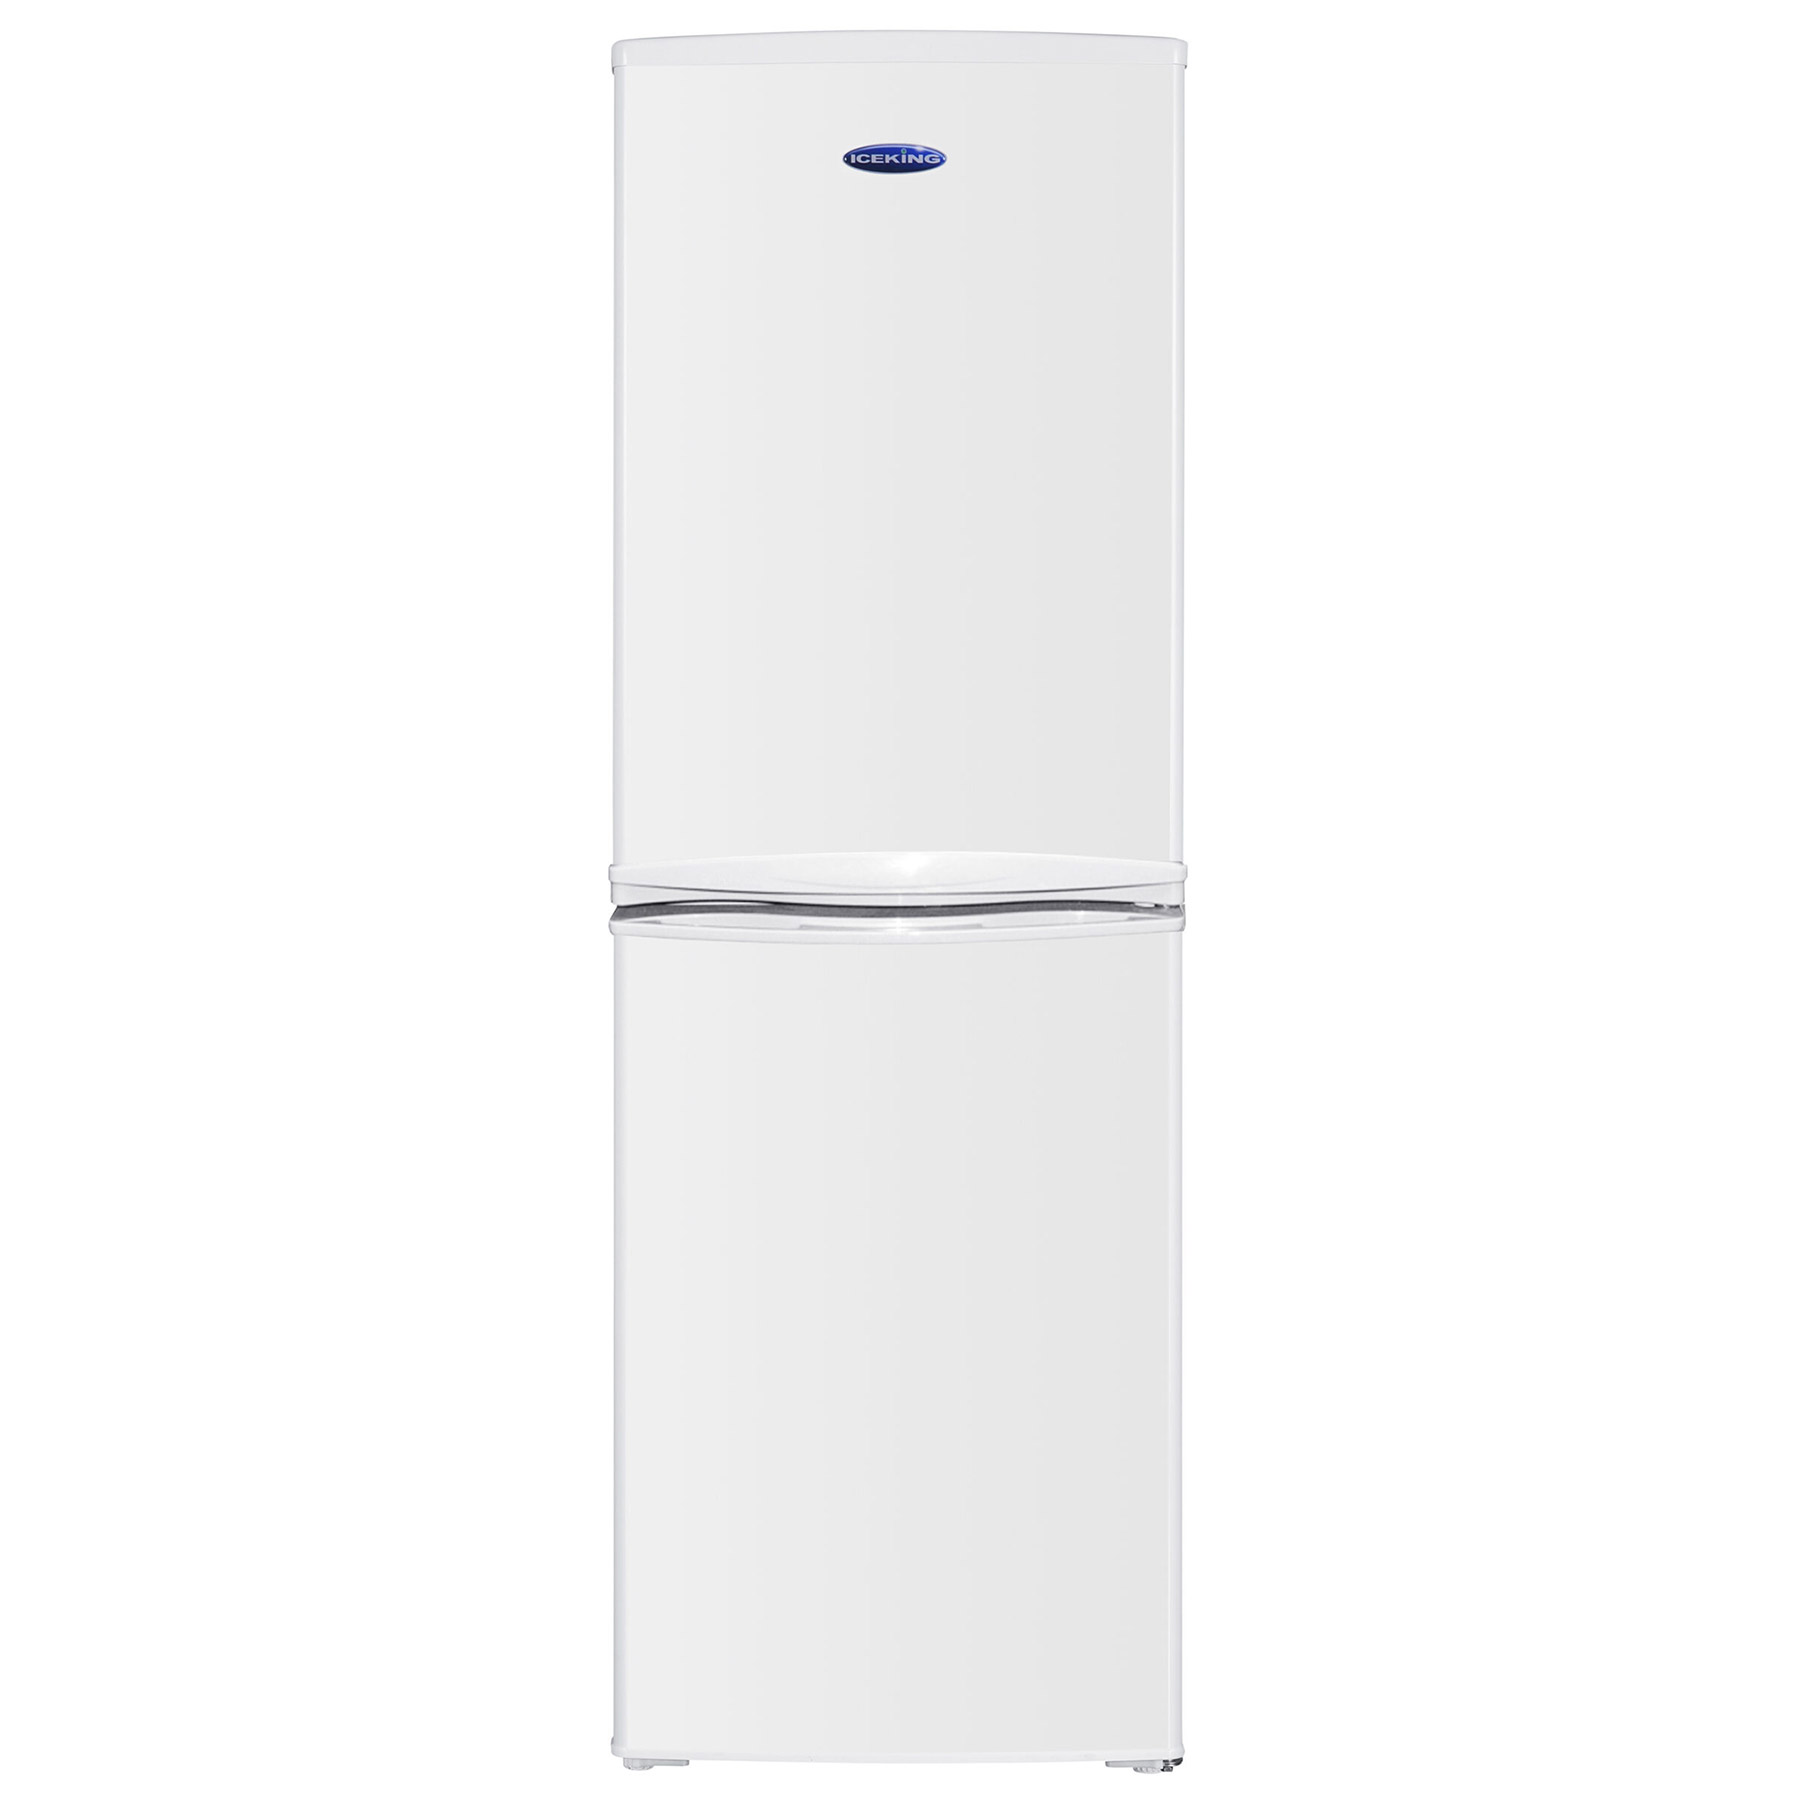 Iceking IK8951EW 48cm Fridge Freezer in White 1 44m E Rated 87 55L